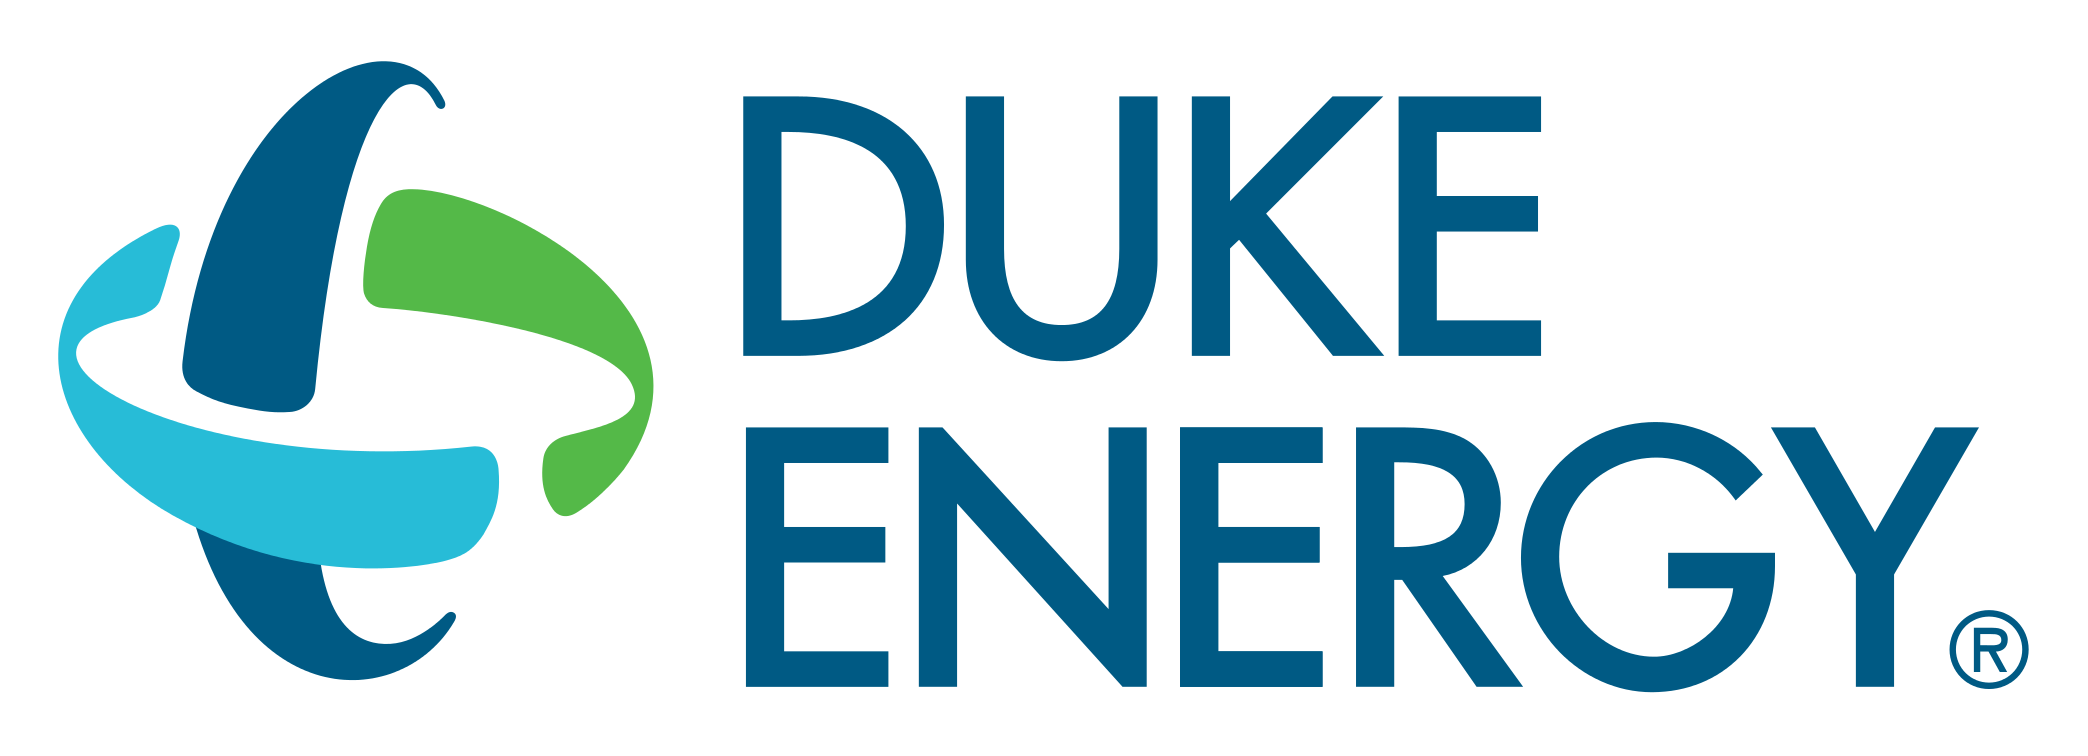 Duke Energy Logo PNG Image for Free Download